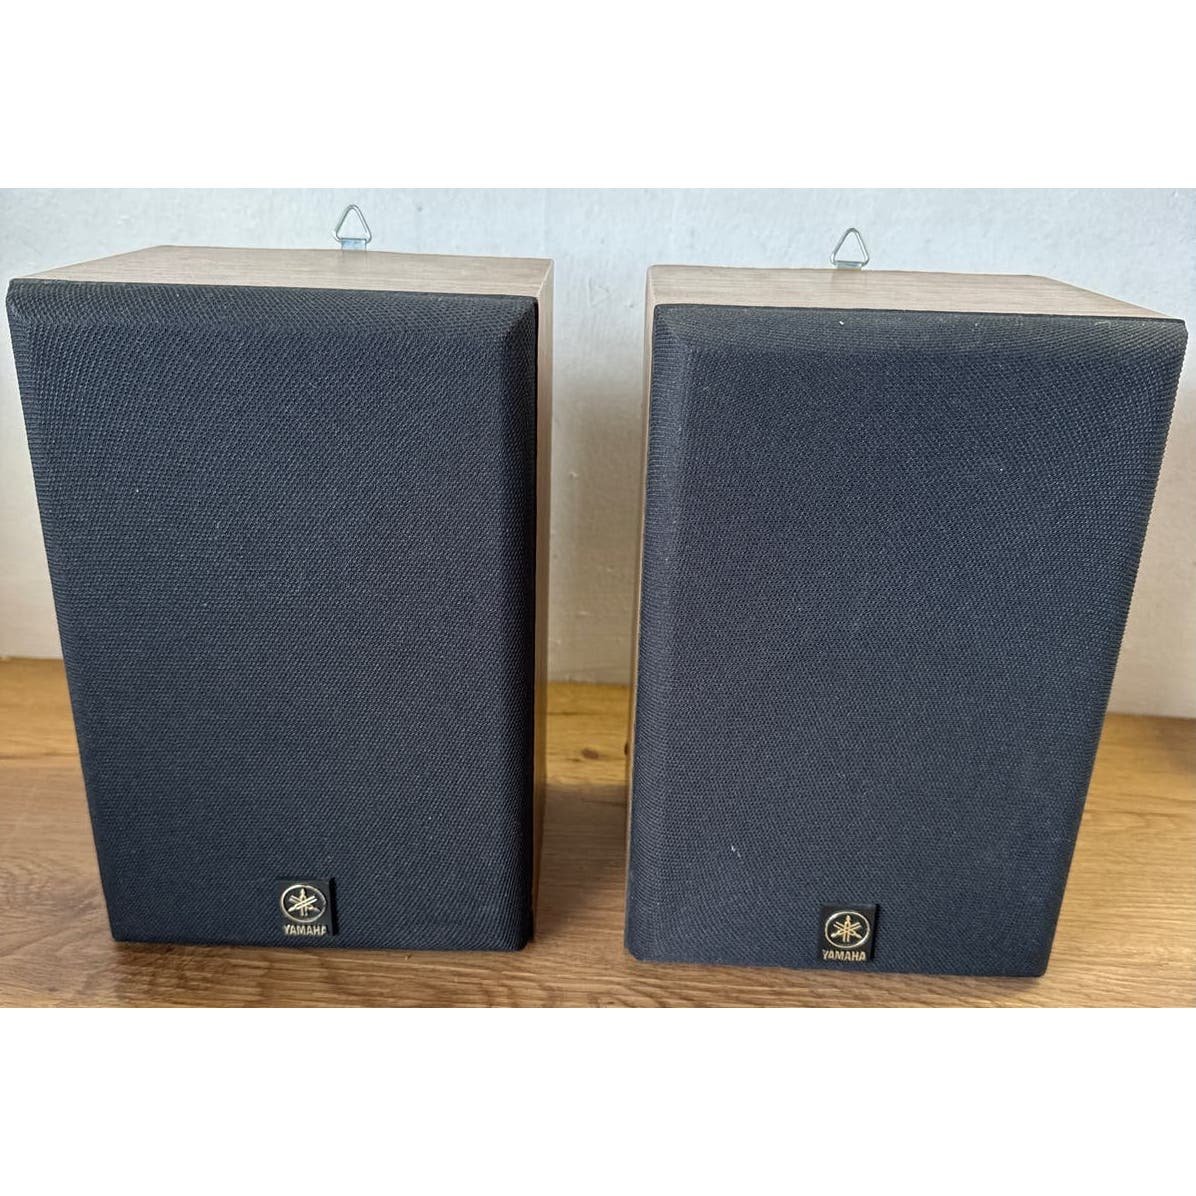 2 YAMAHA Model NS-A70  Bookshelf Speakers mmAvUOCZu